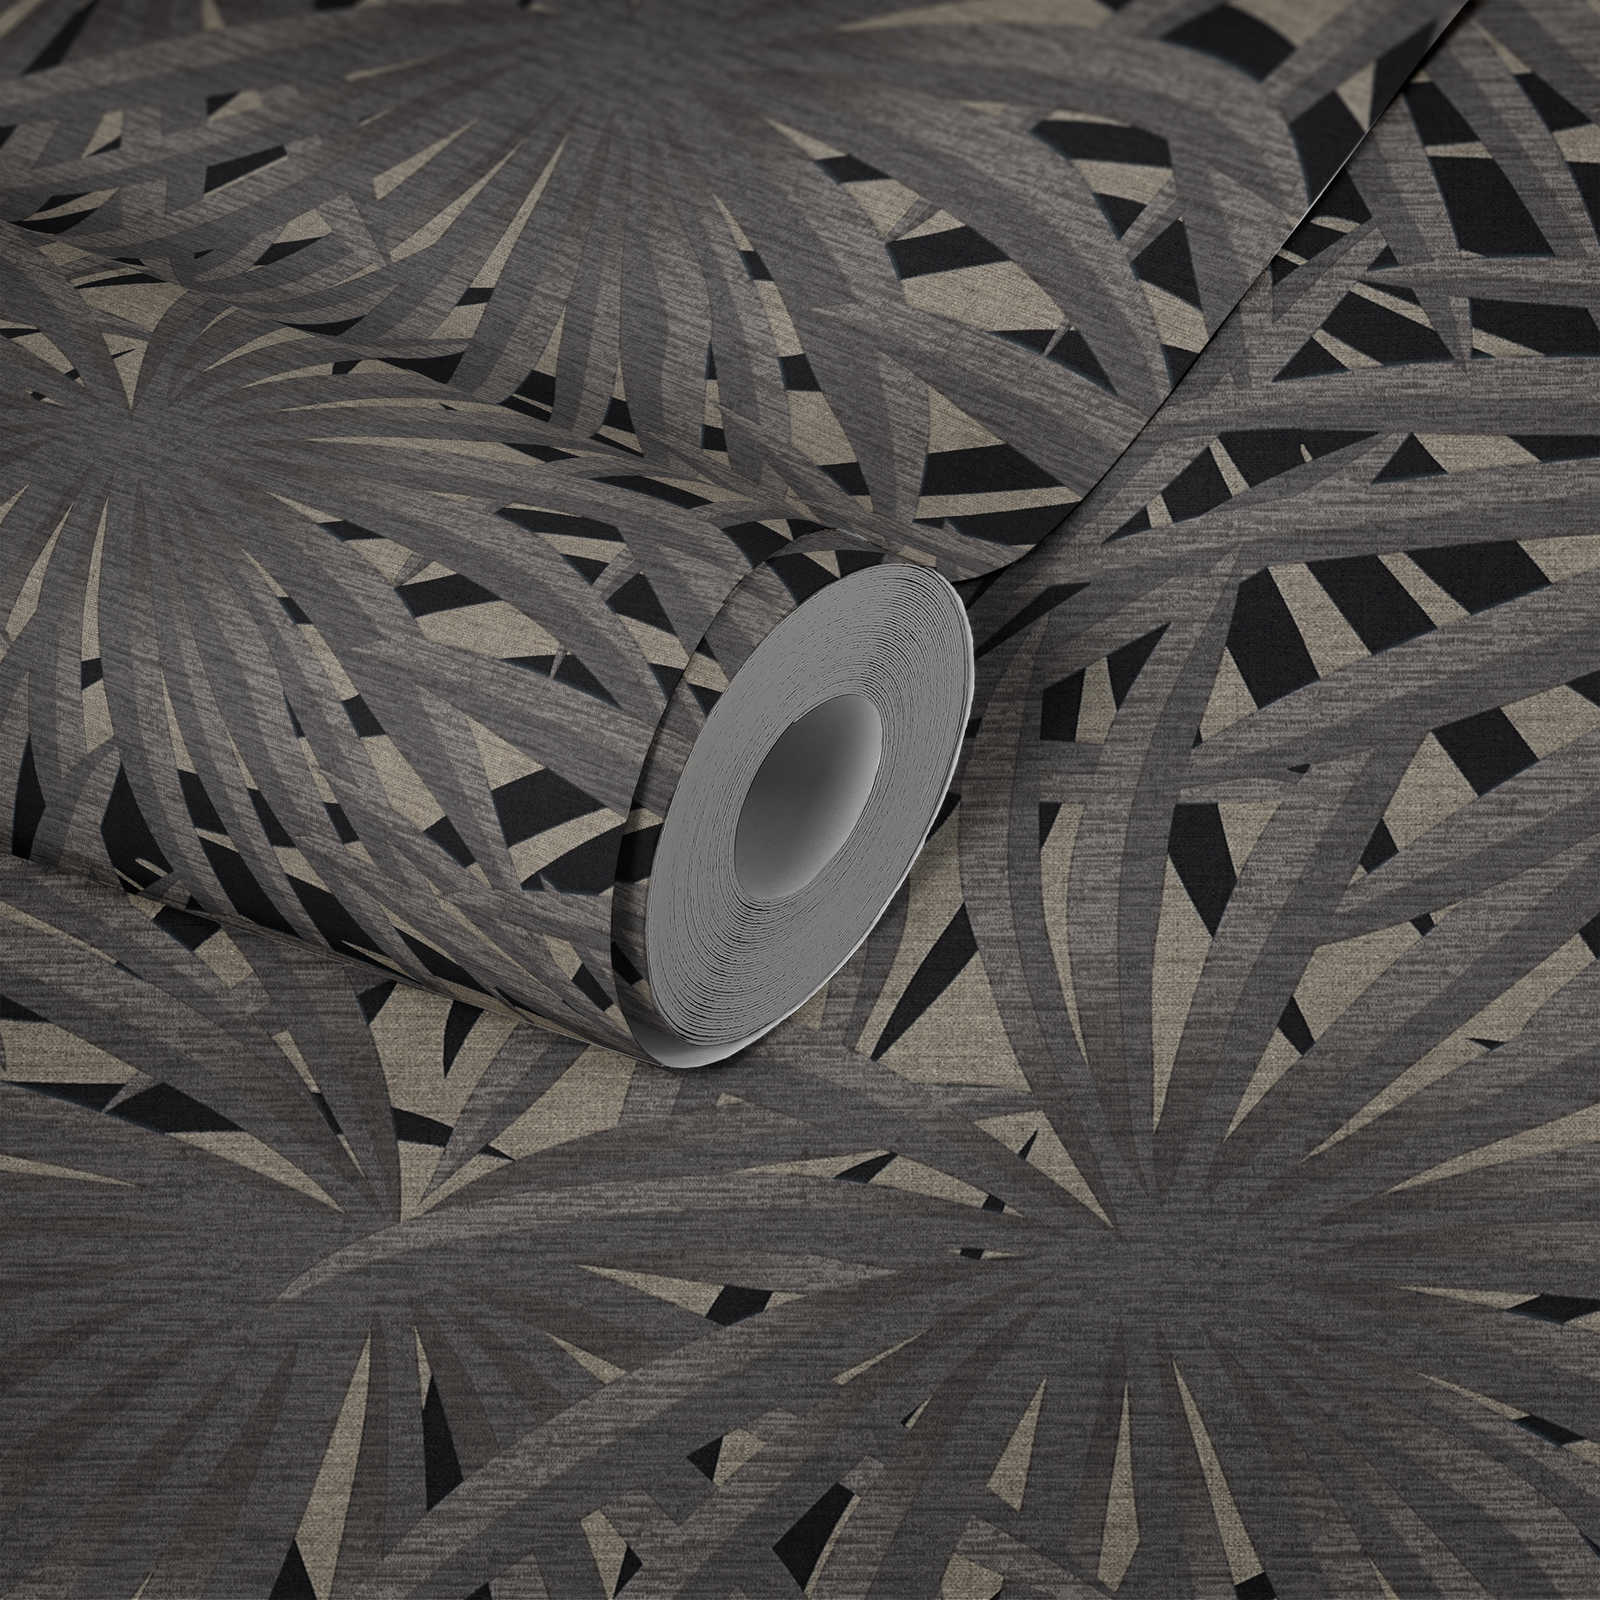             Non-woven wallpaper jungle design with metallic effect - grey, metallic, black
        